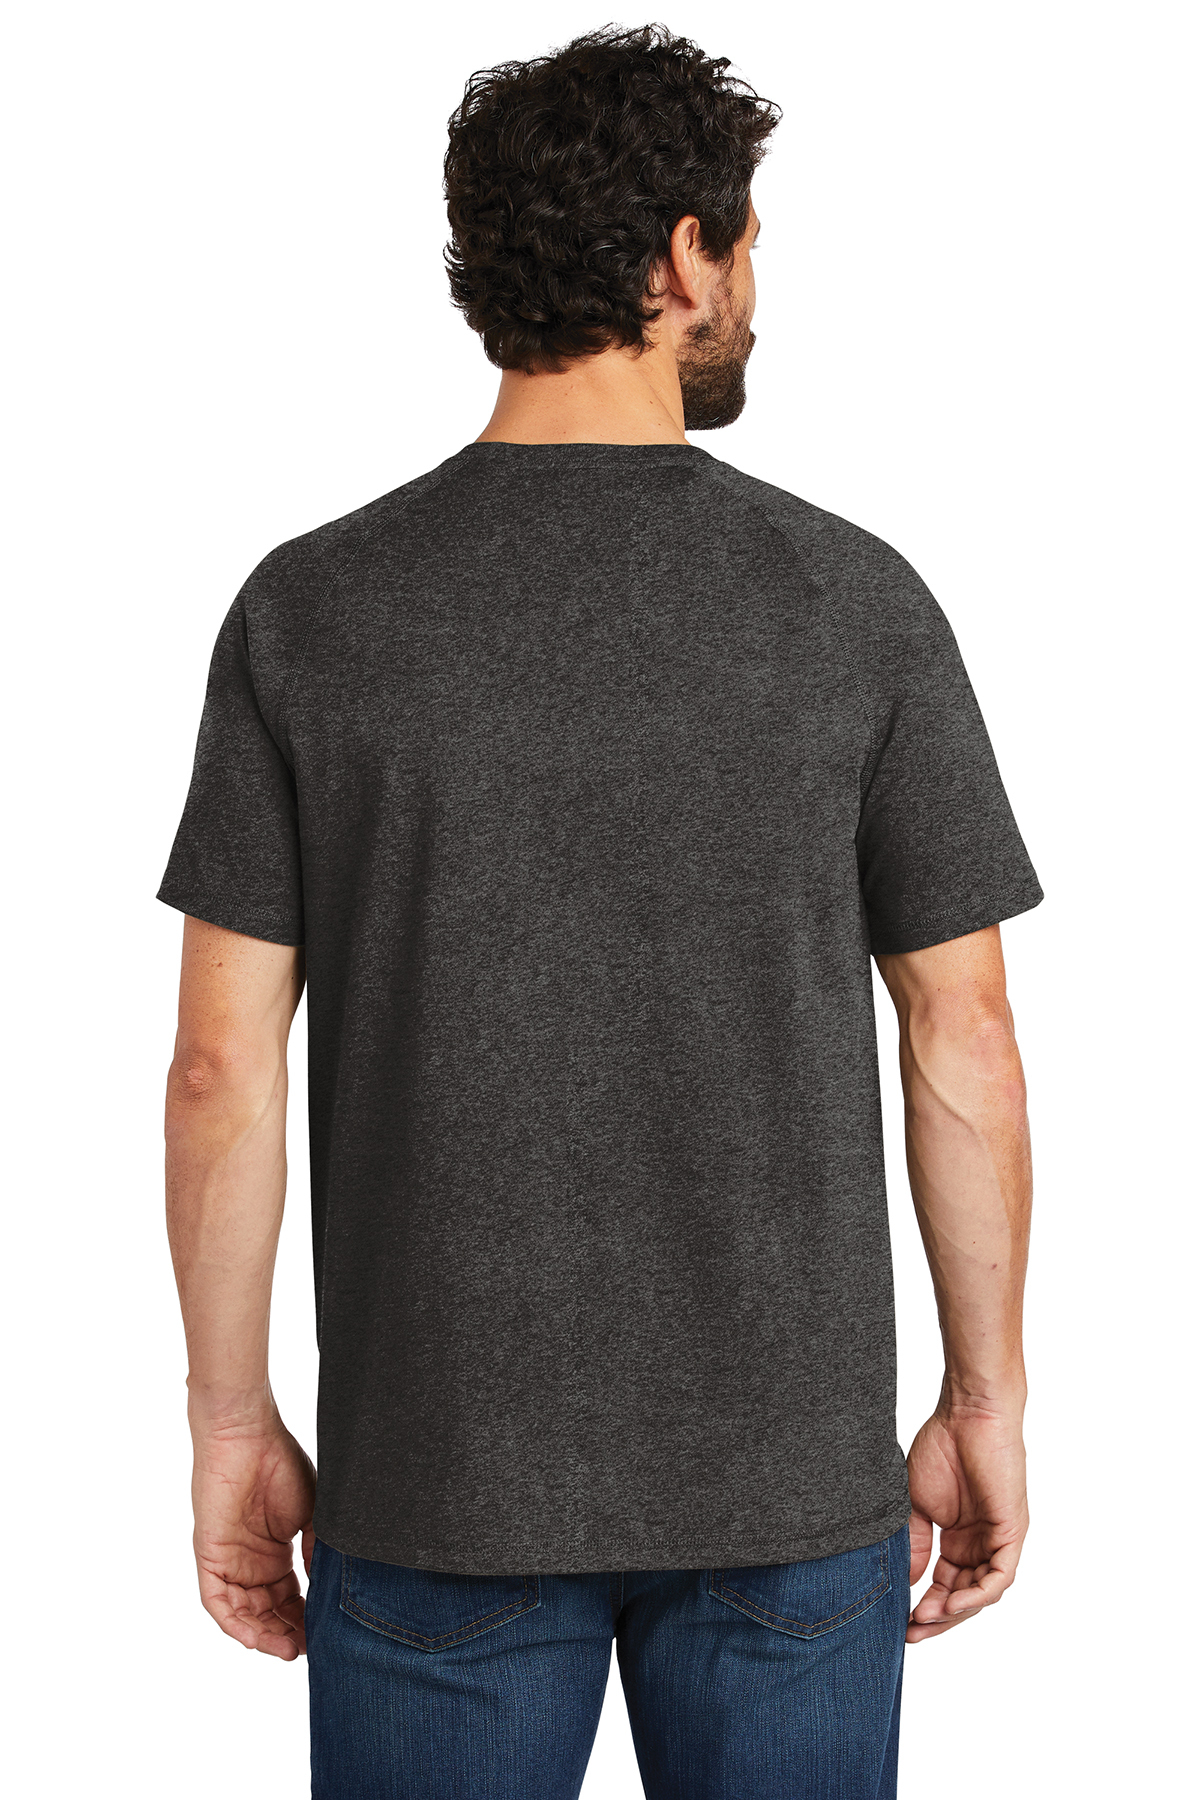 Carhartt Force Cotton Delmont Short Sleeve T-Shirt | Product | SanMar